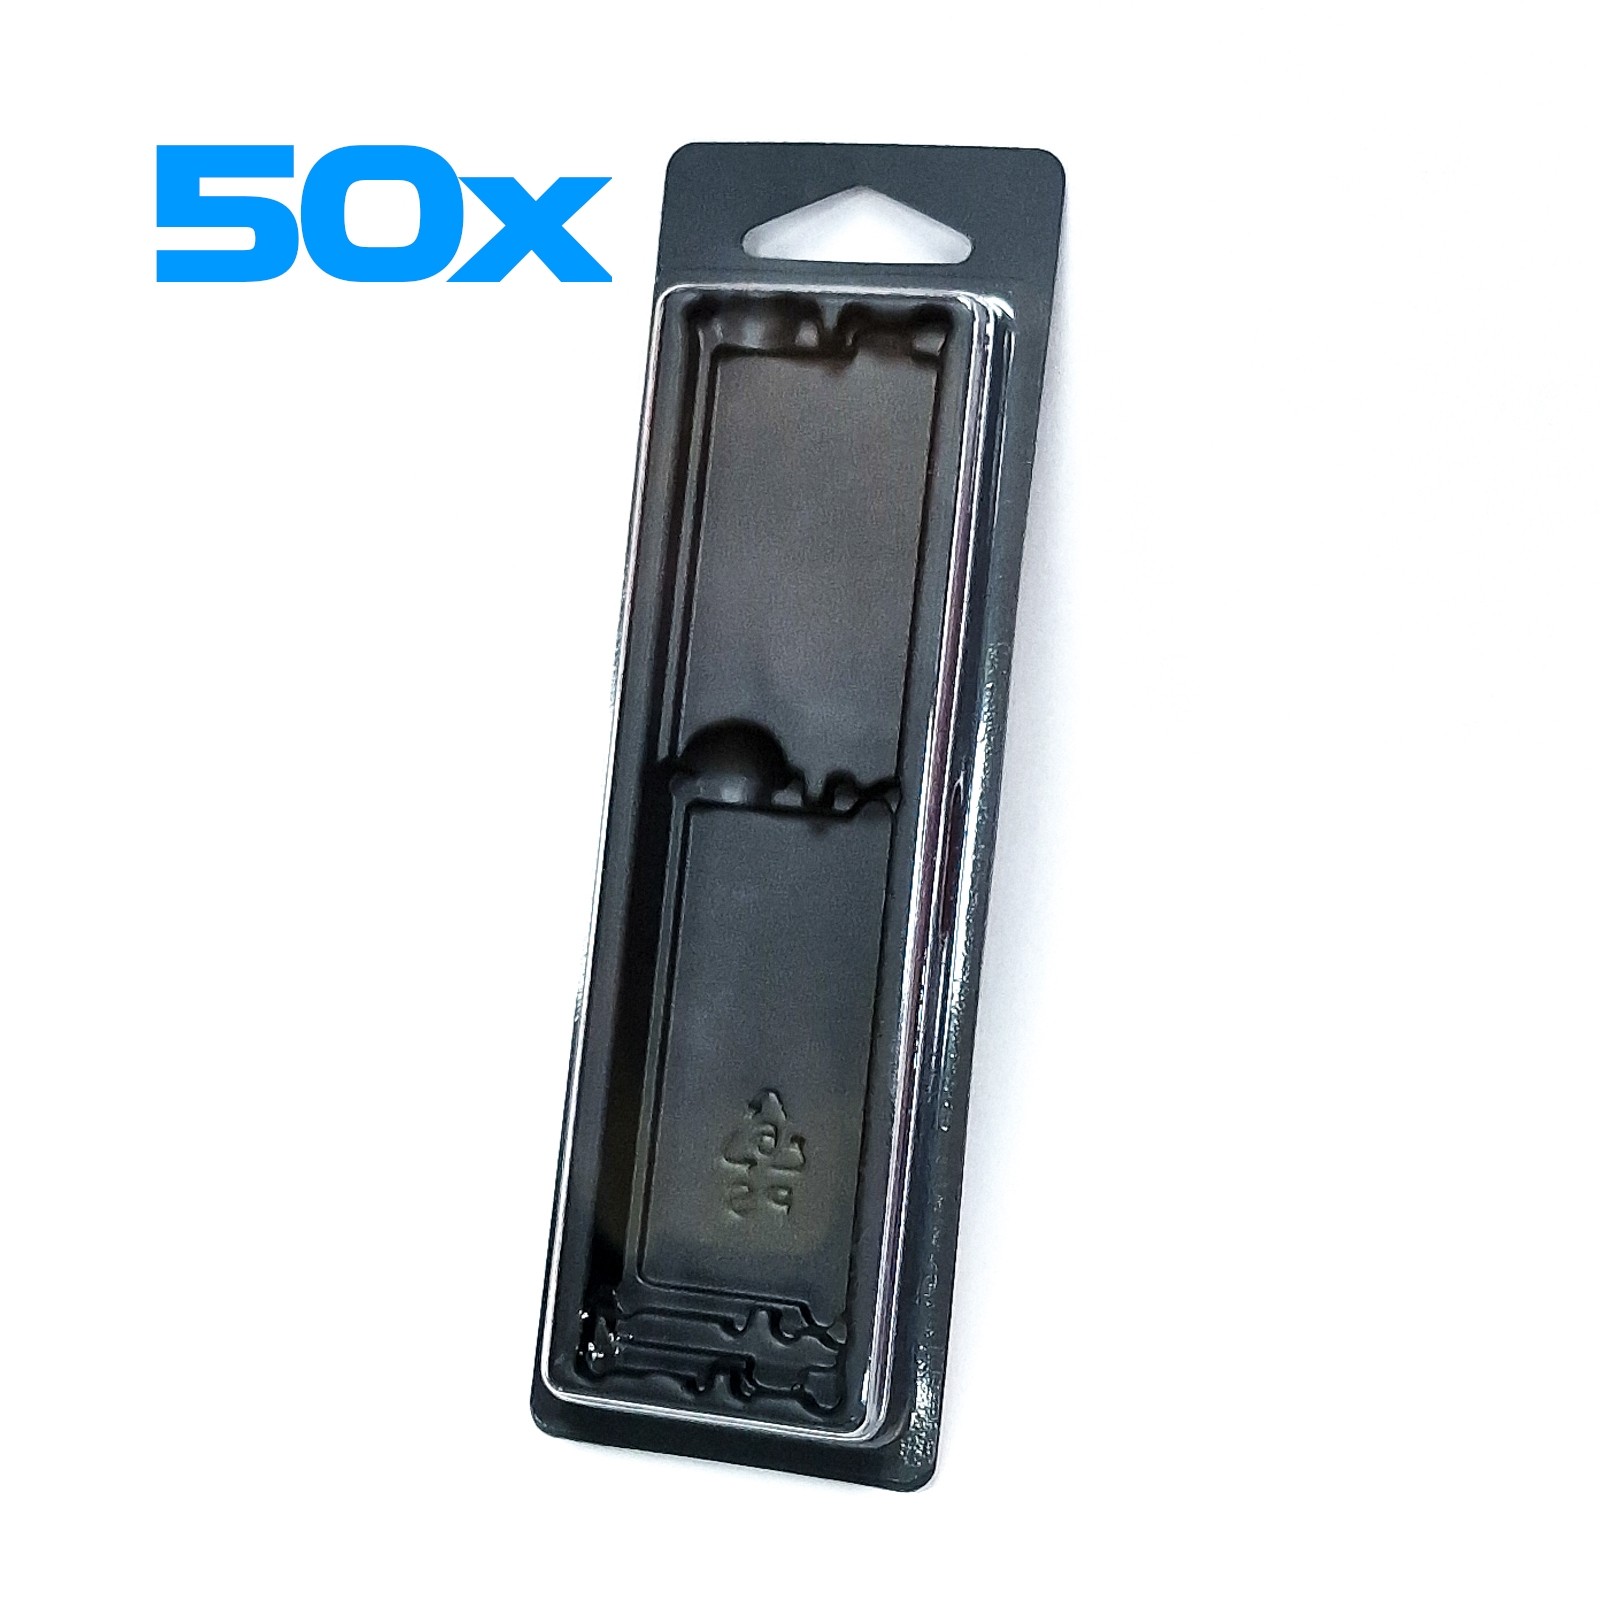 50x SODIMM/DIMM DDR4 DDR5 RAM Packing Box Tray